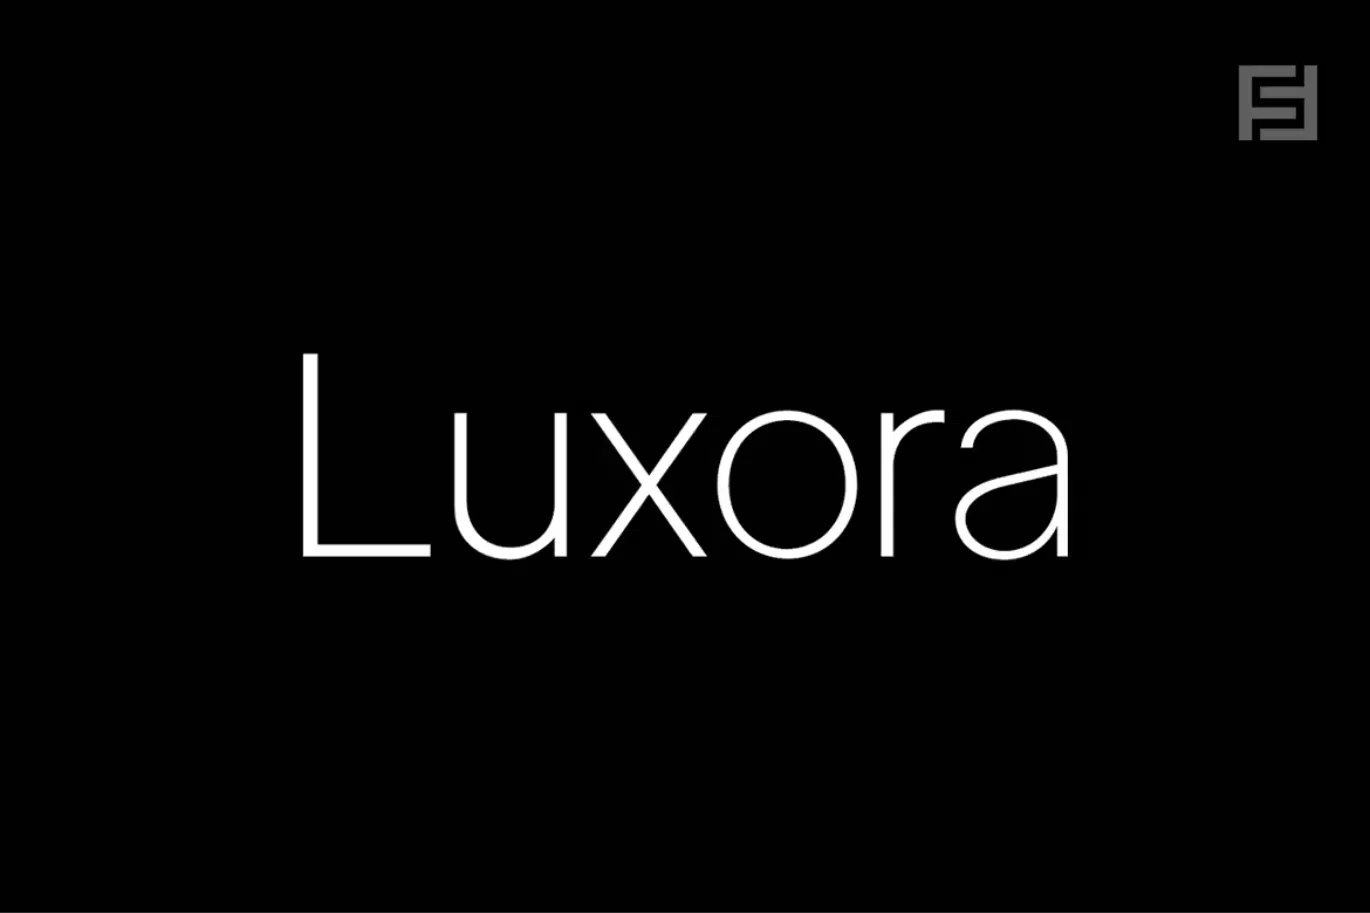 Luxora Font Font Similar To Raleway